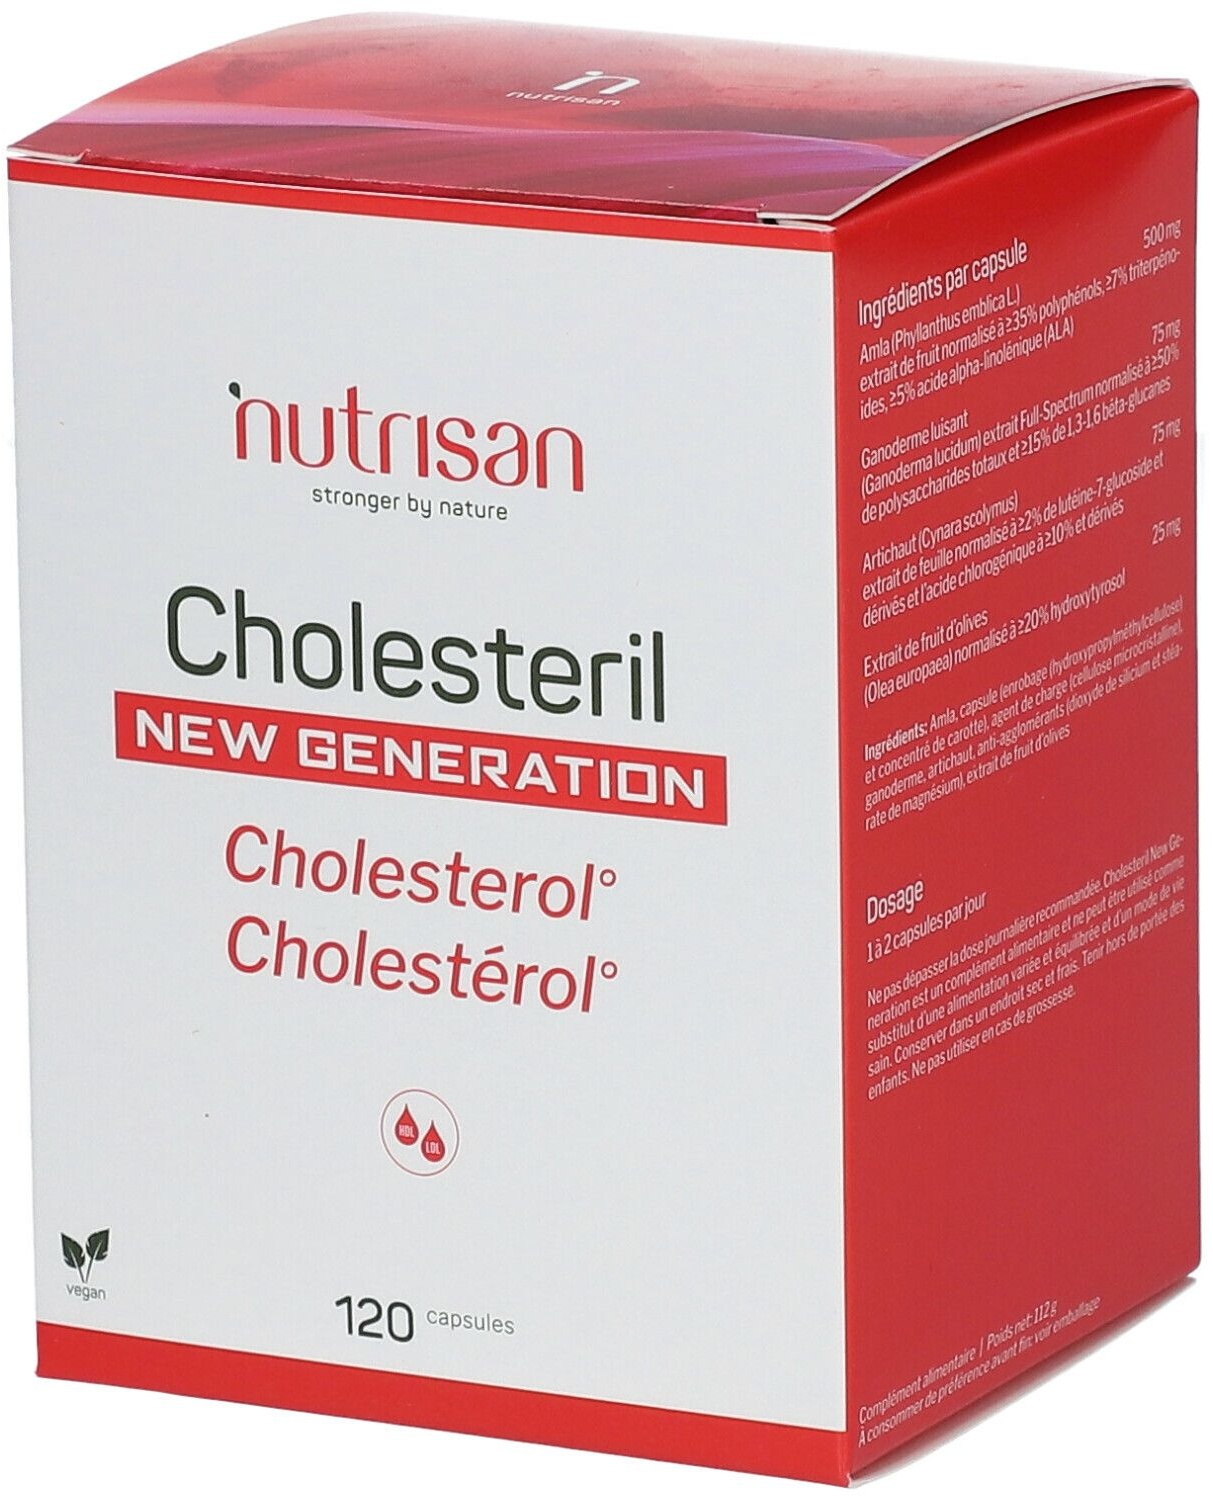 nutrisan Cholesteril New Generation Cholestérol° 120 pc(s) capsule(s)